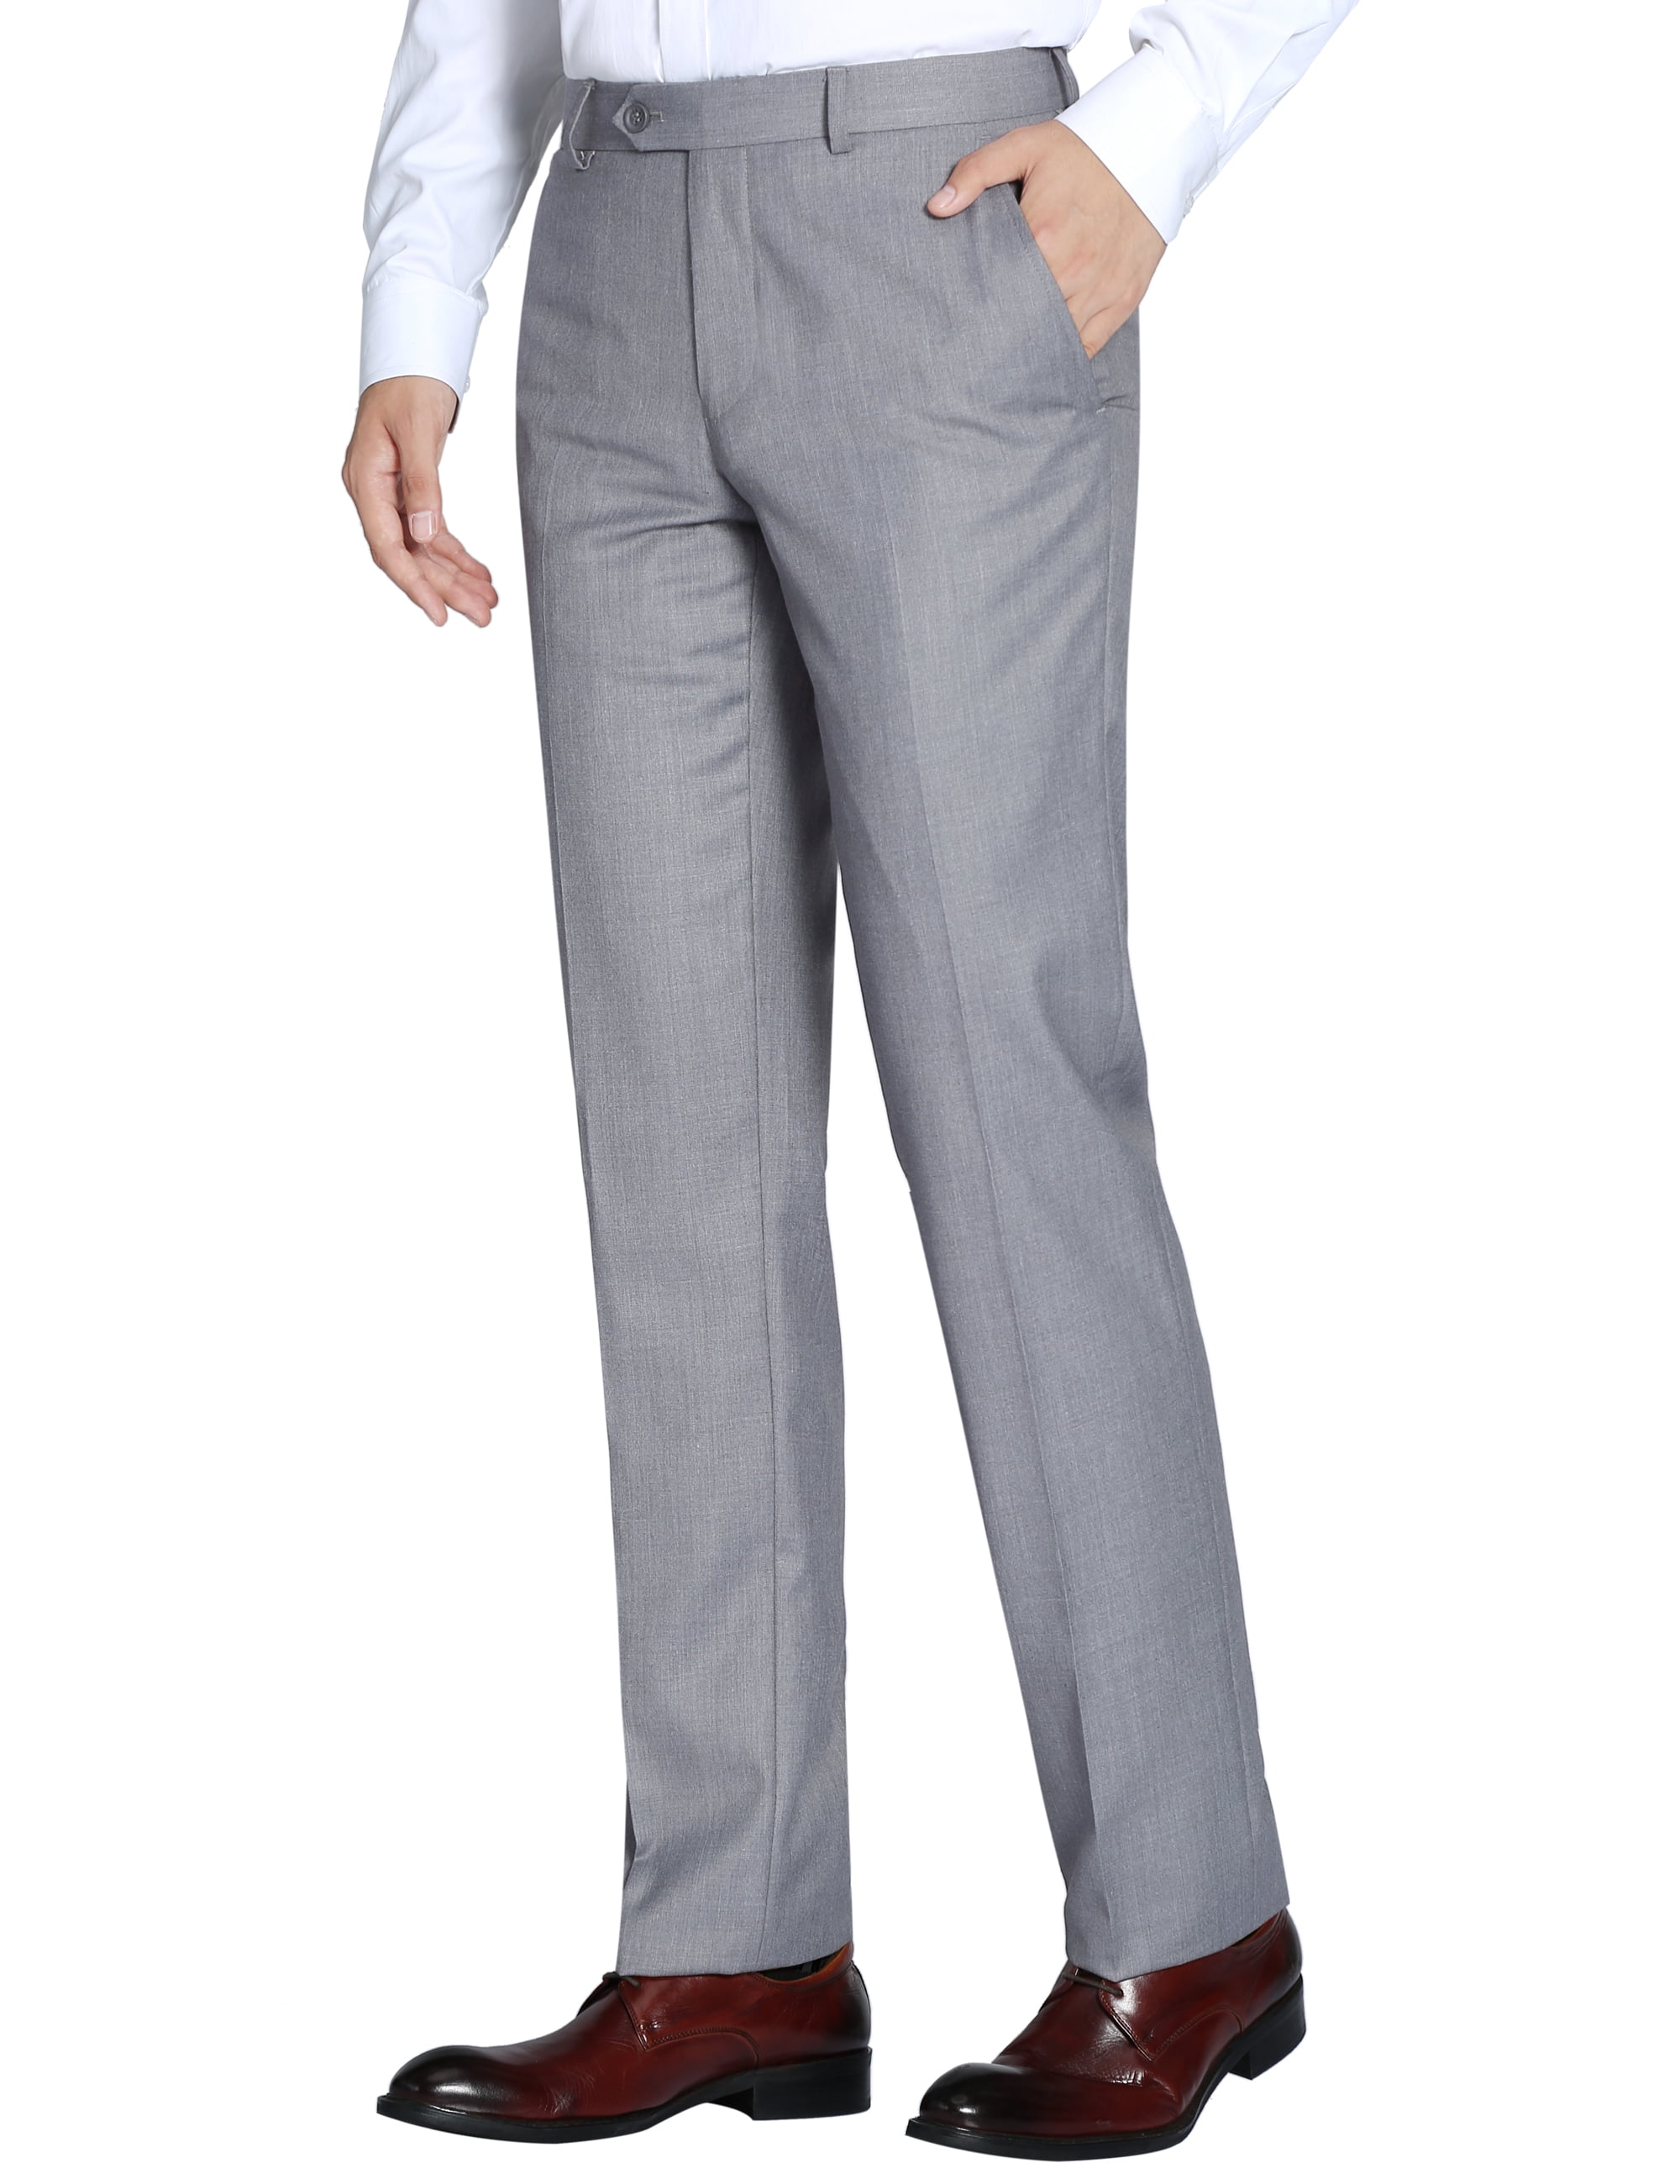 George Mens Classic Fit Flat Front Performance Dress Pants Grey, 36W x 29L